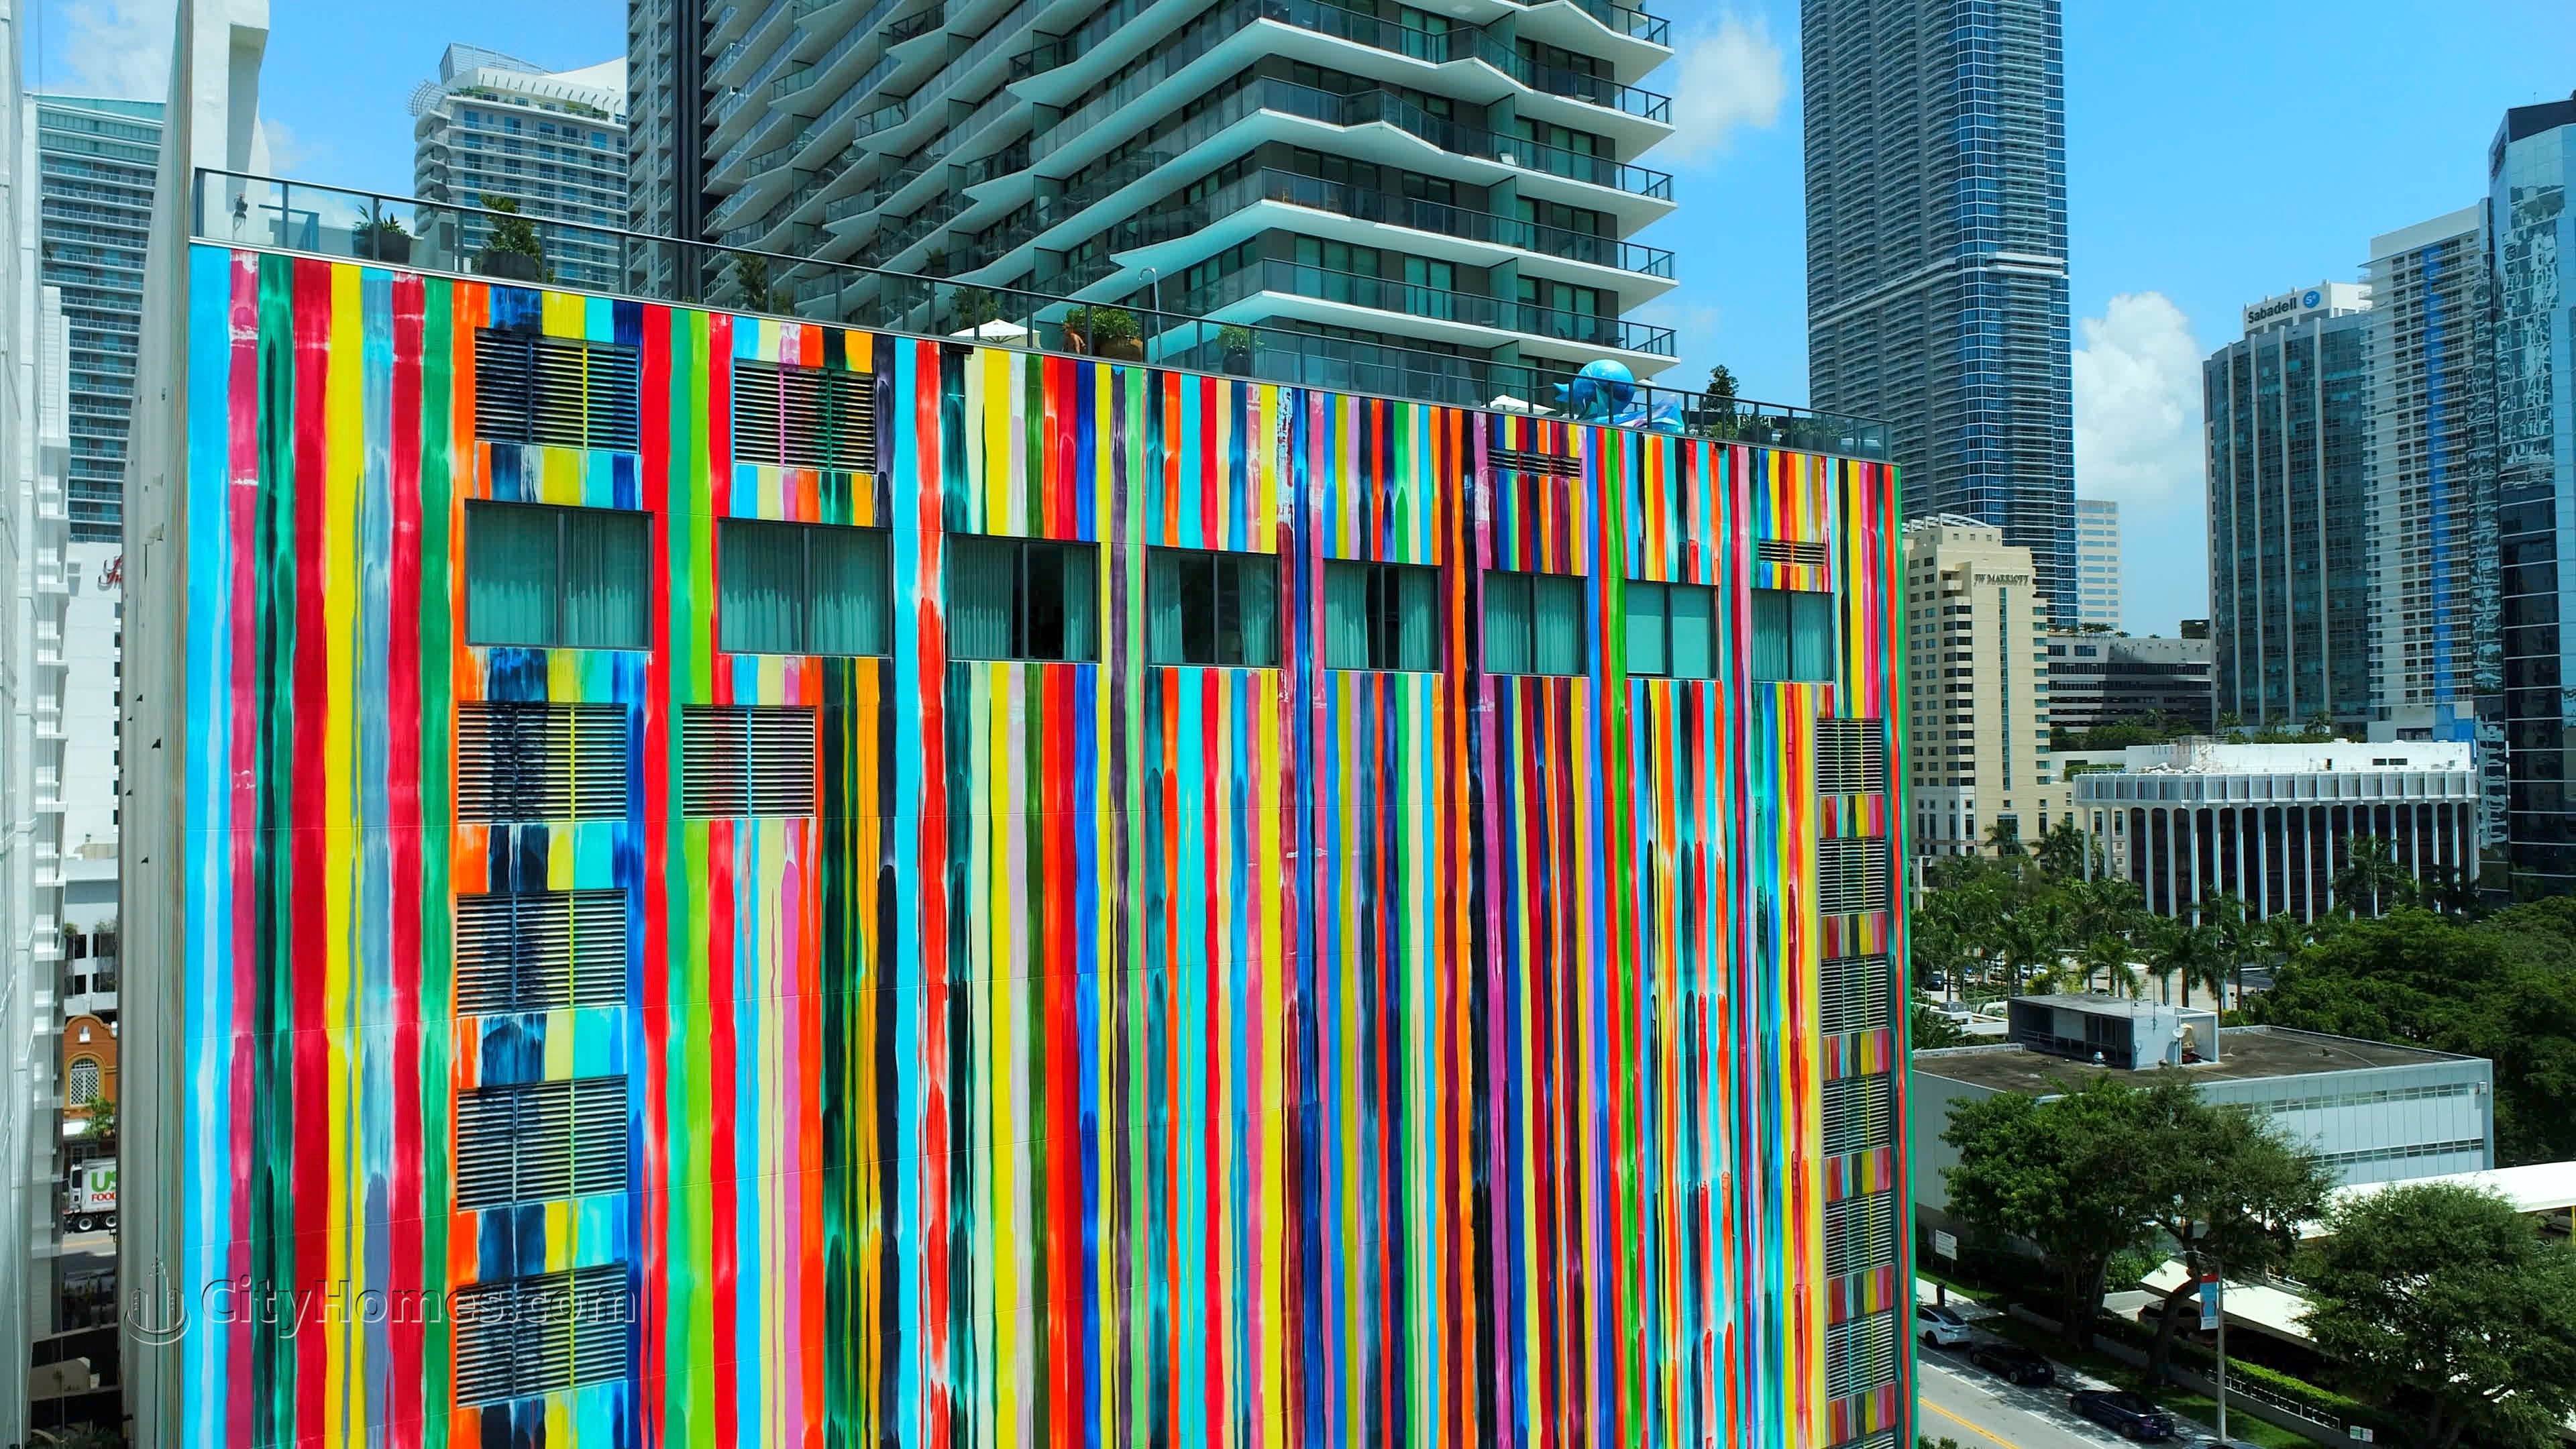 2. SLS Brickell κτίριο σε 1300 S Miami Ave, Brickell, Miami, FL 33130